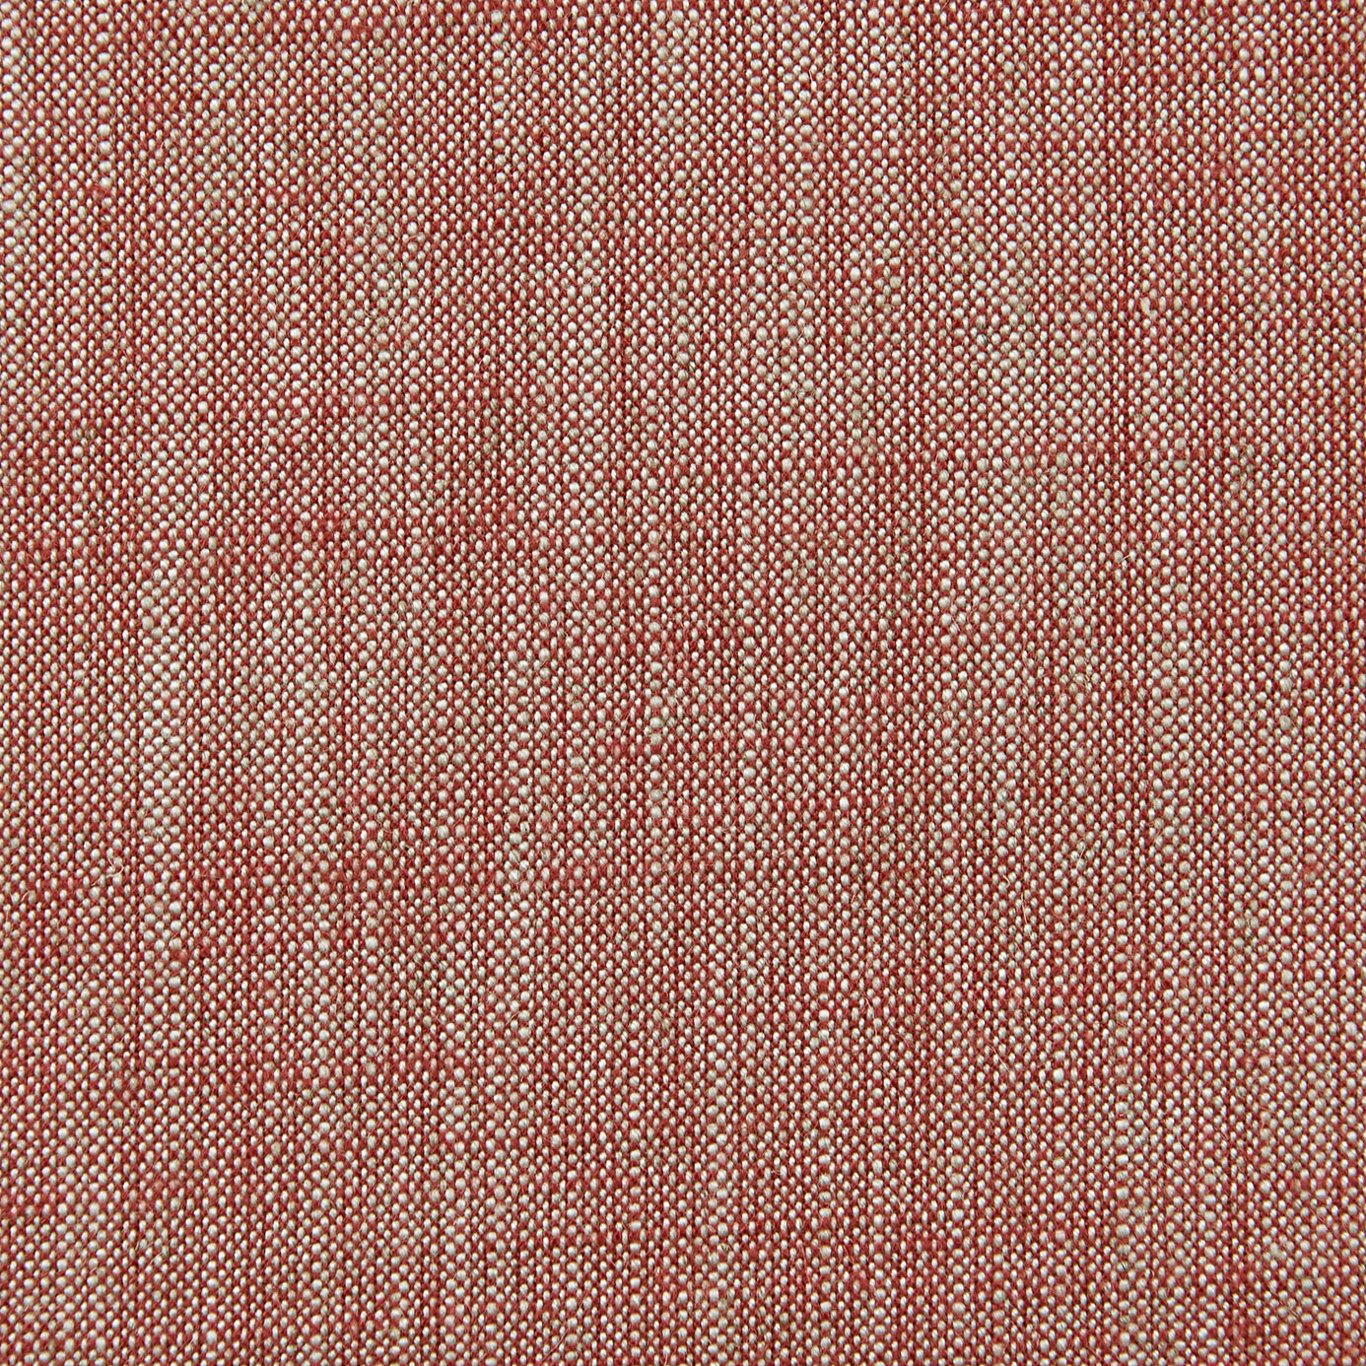 Biarritz Fabric by Clarke & Clarke - F0965/06 - Cabernet